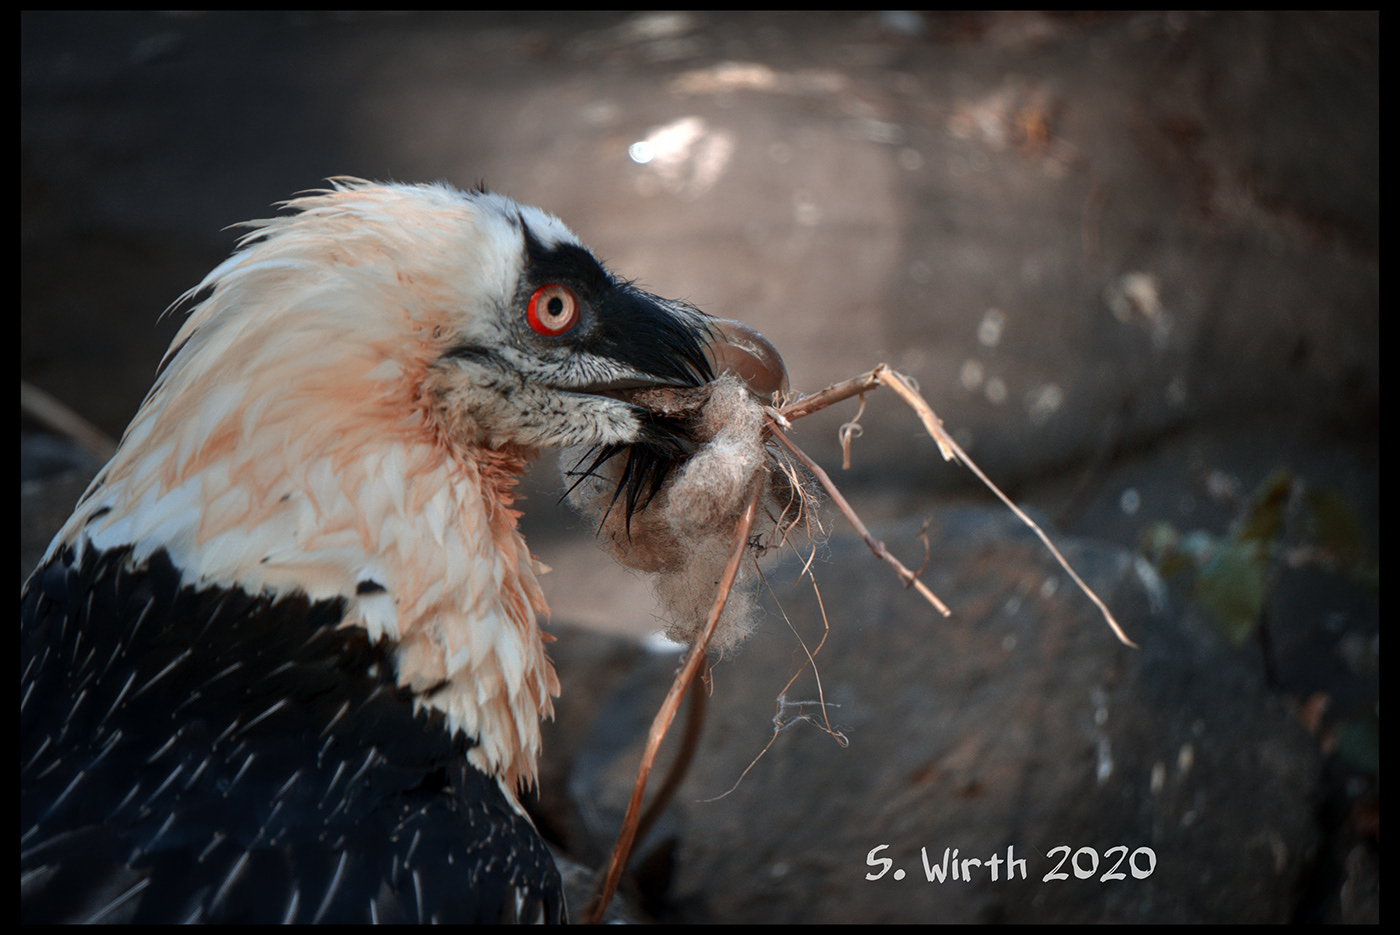 august 2020 Behavior bird Gypaetus barbatus nesting Stefan F. Wirth vulture zoo berlin